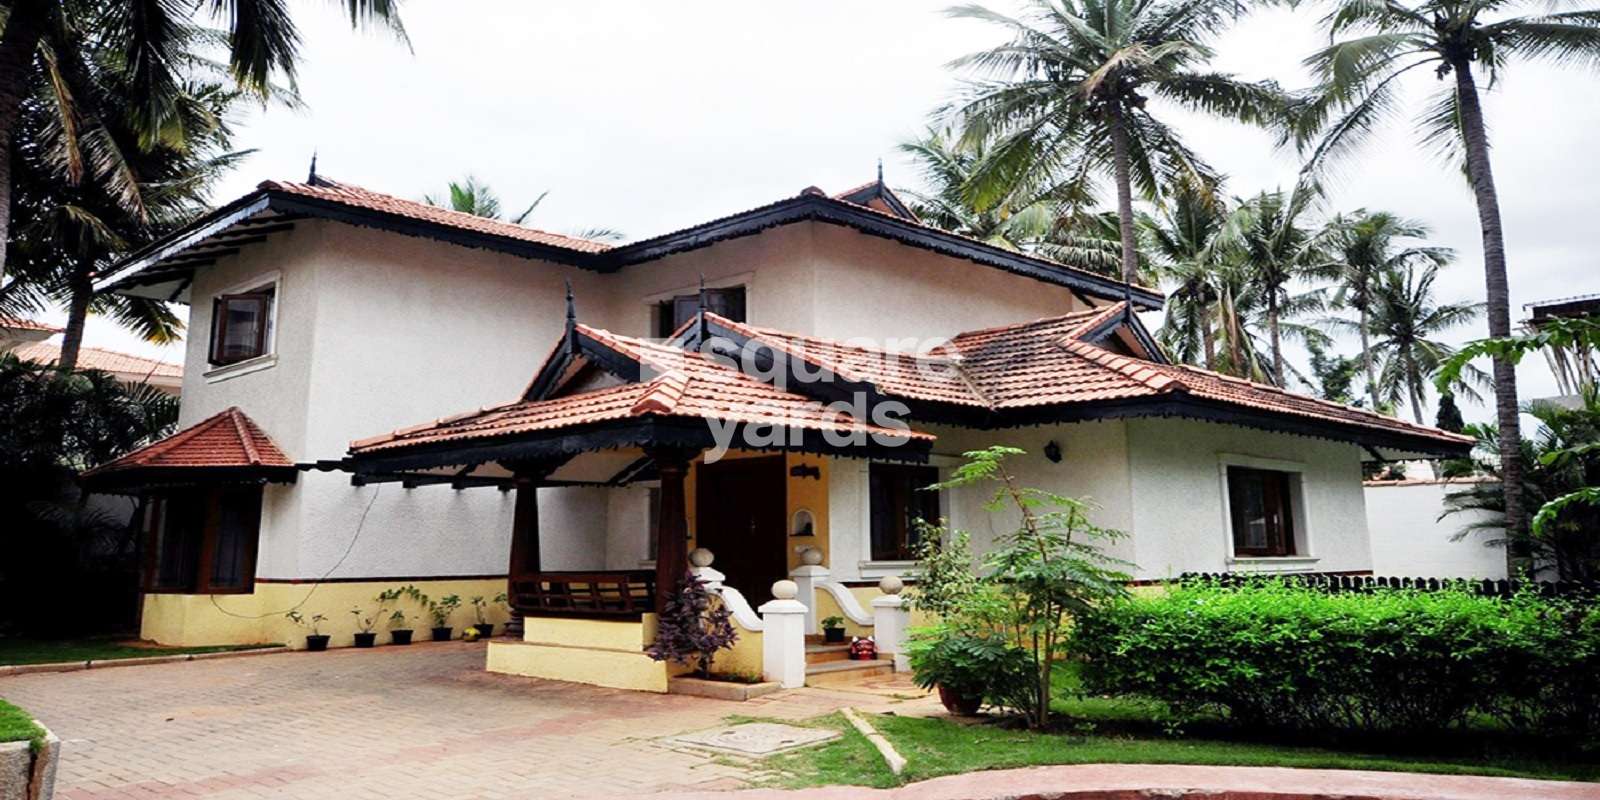 Chaithanya Armadale Villa Cover Image